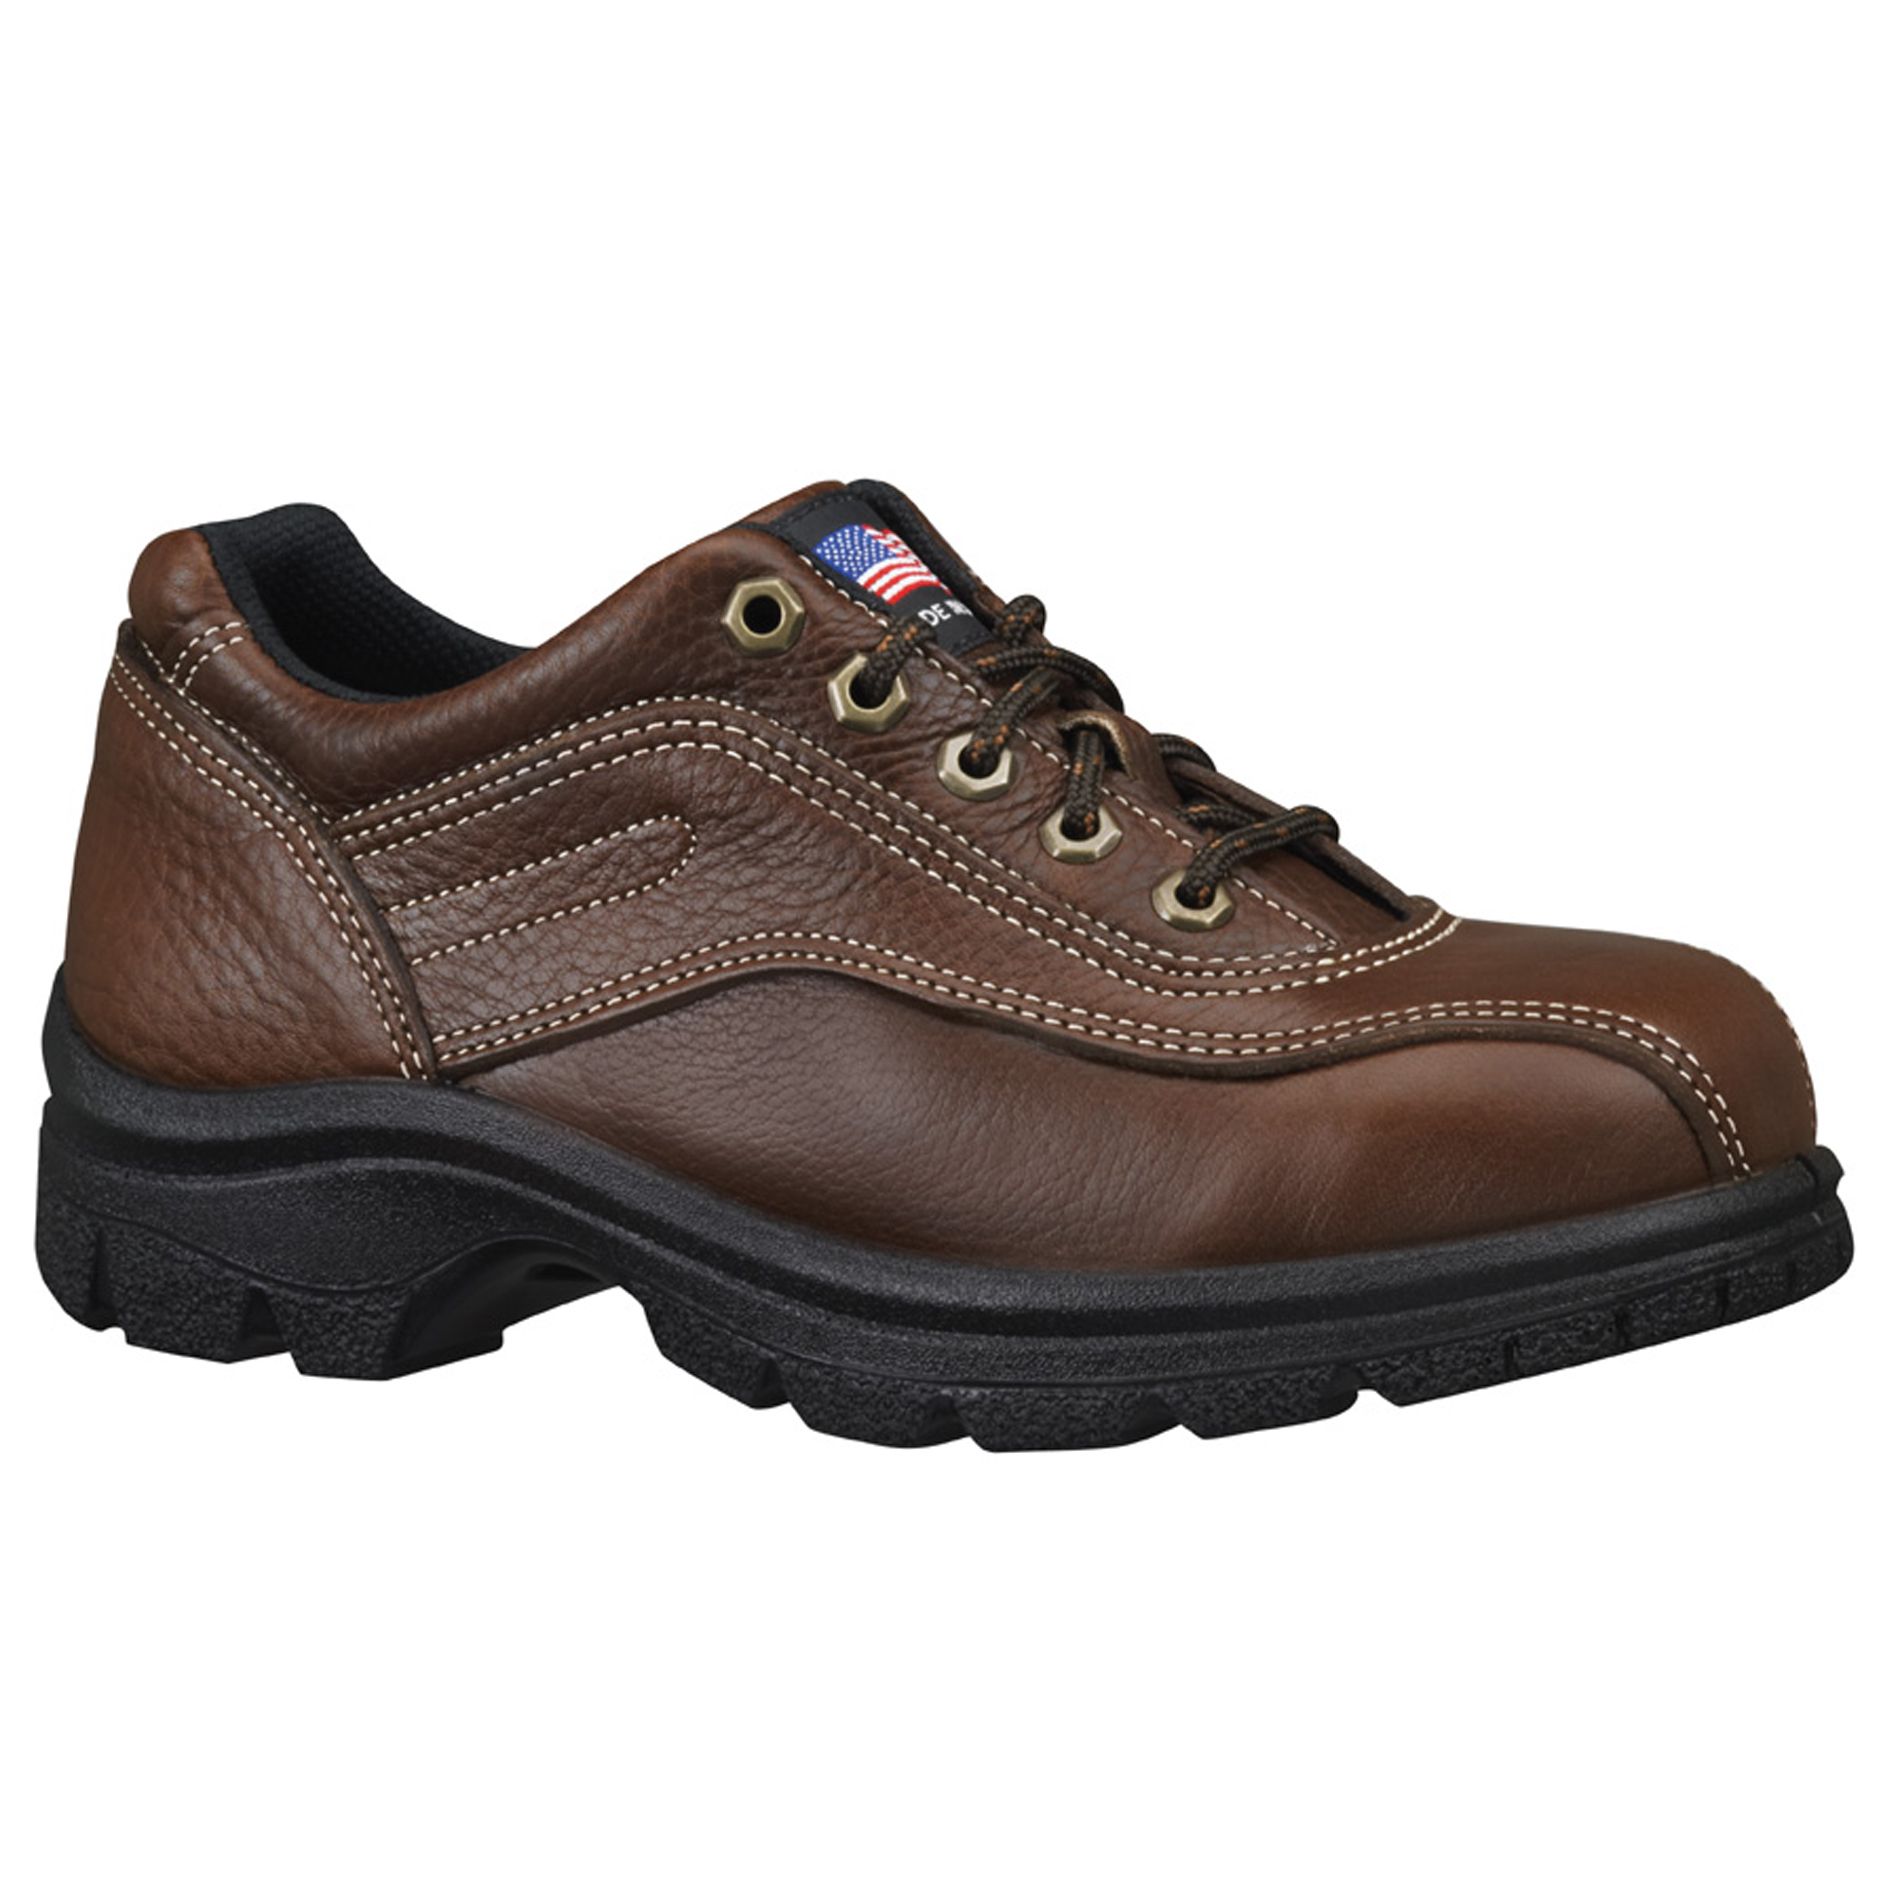 Laredo Women's American Heritage 504-4406 Brown Steel Toe Work Shoes - Wide Width Available